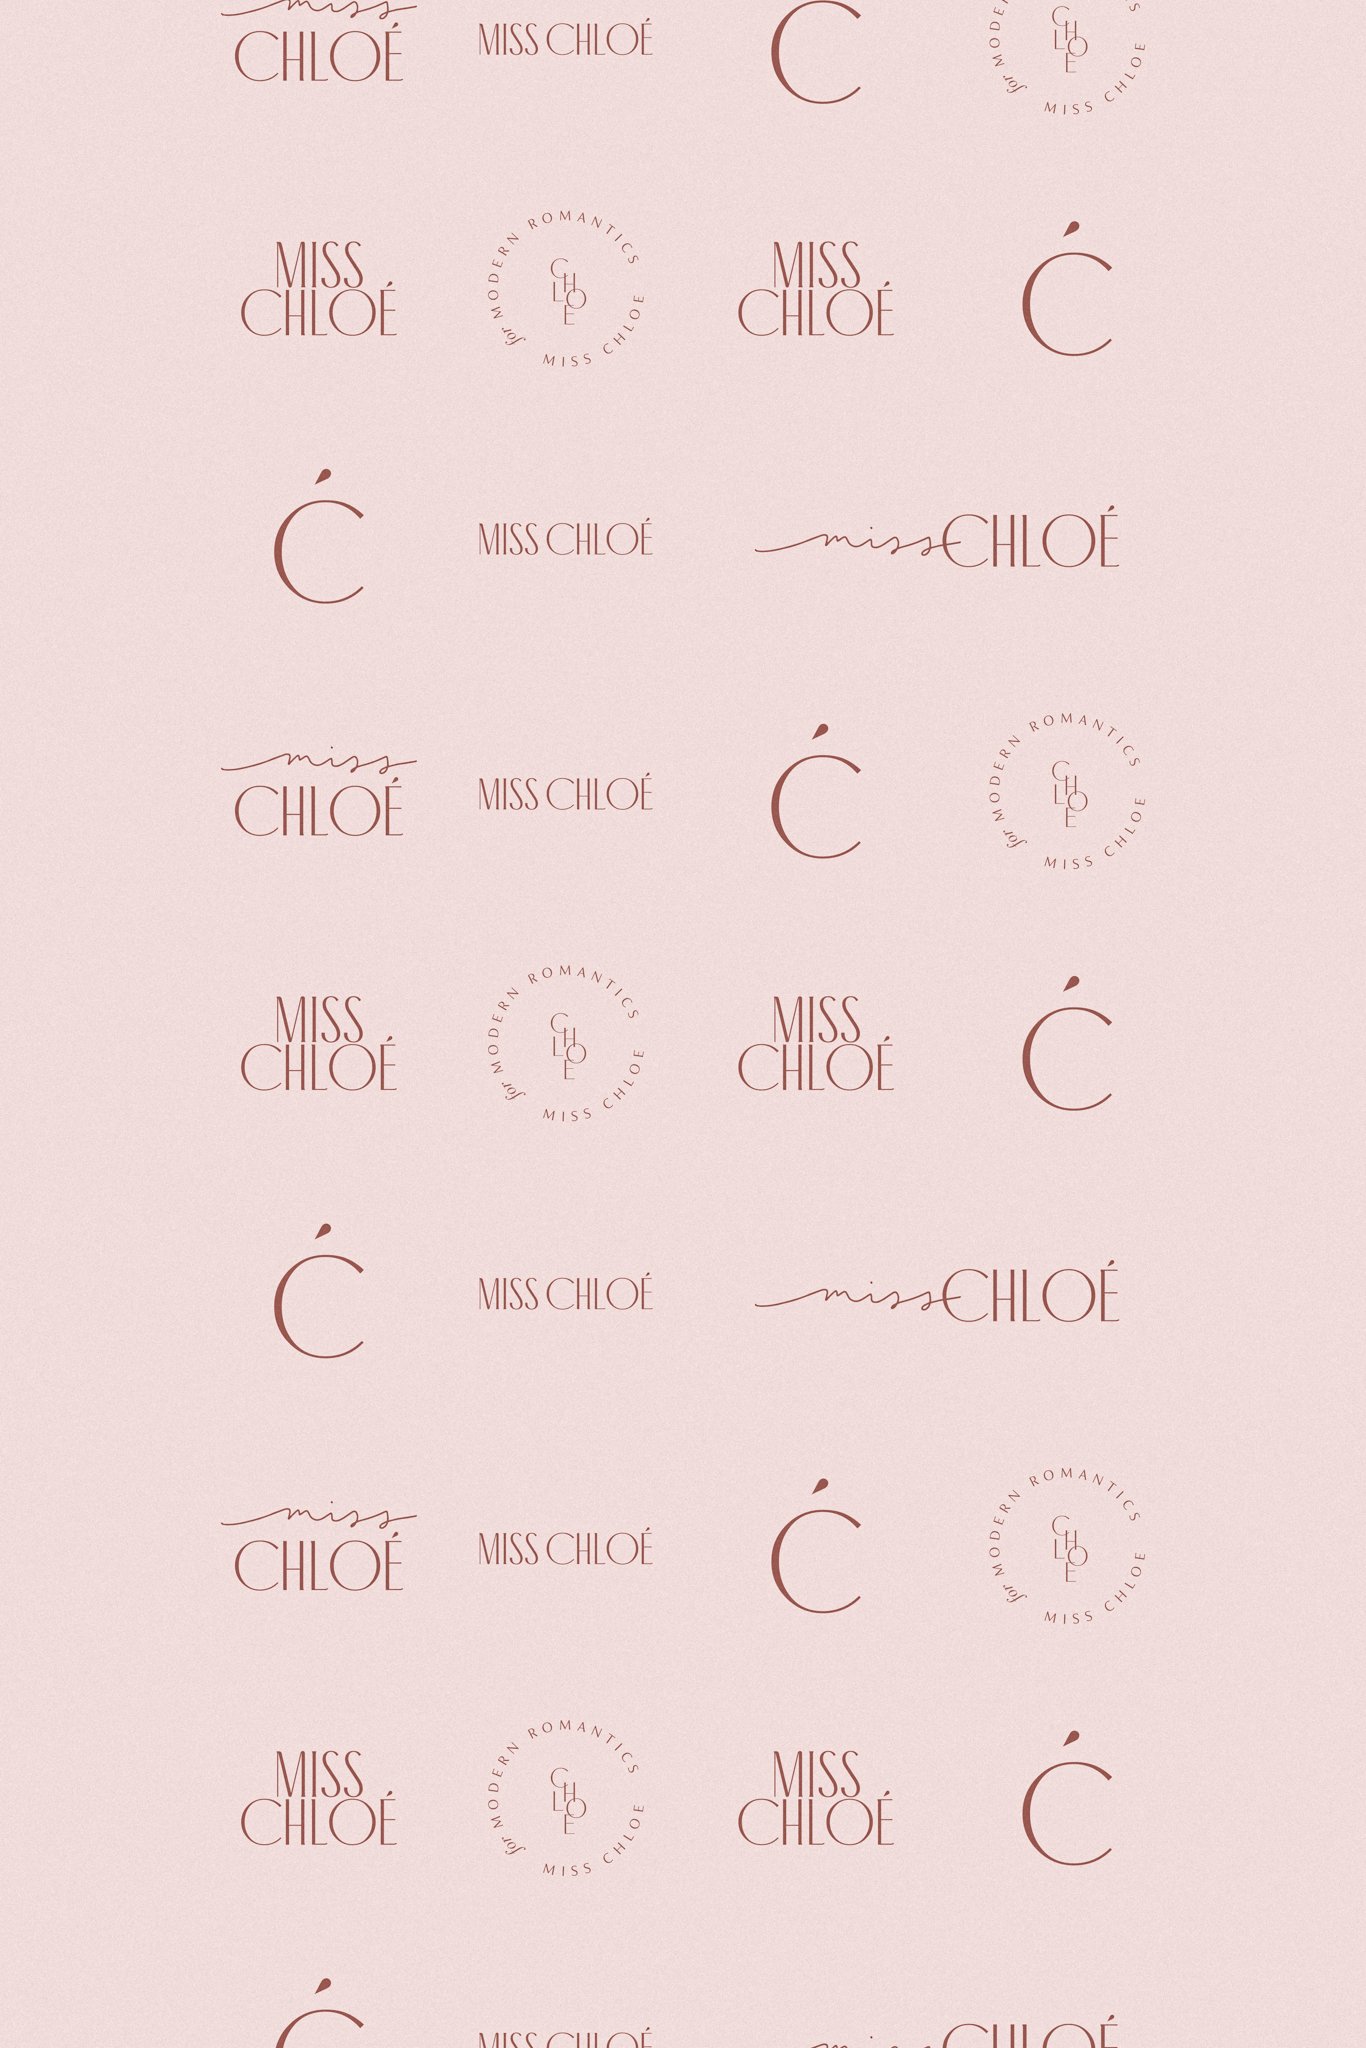 Miss Chloe Bridal — January Made Design